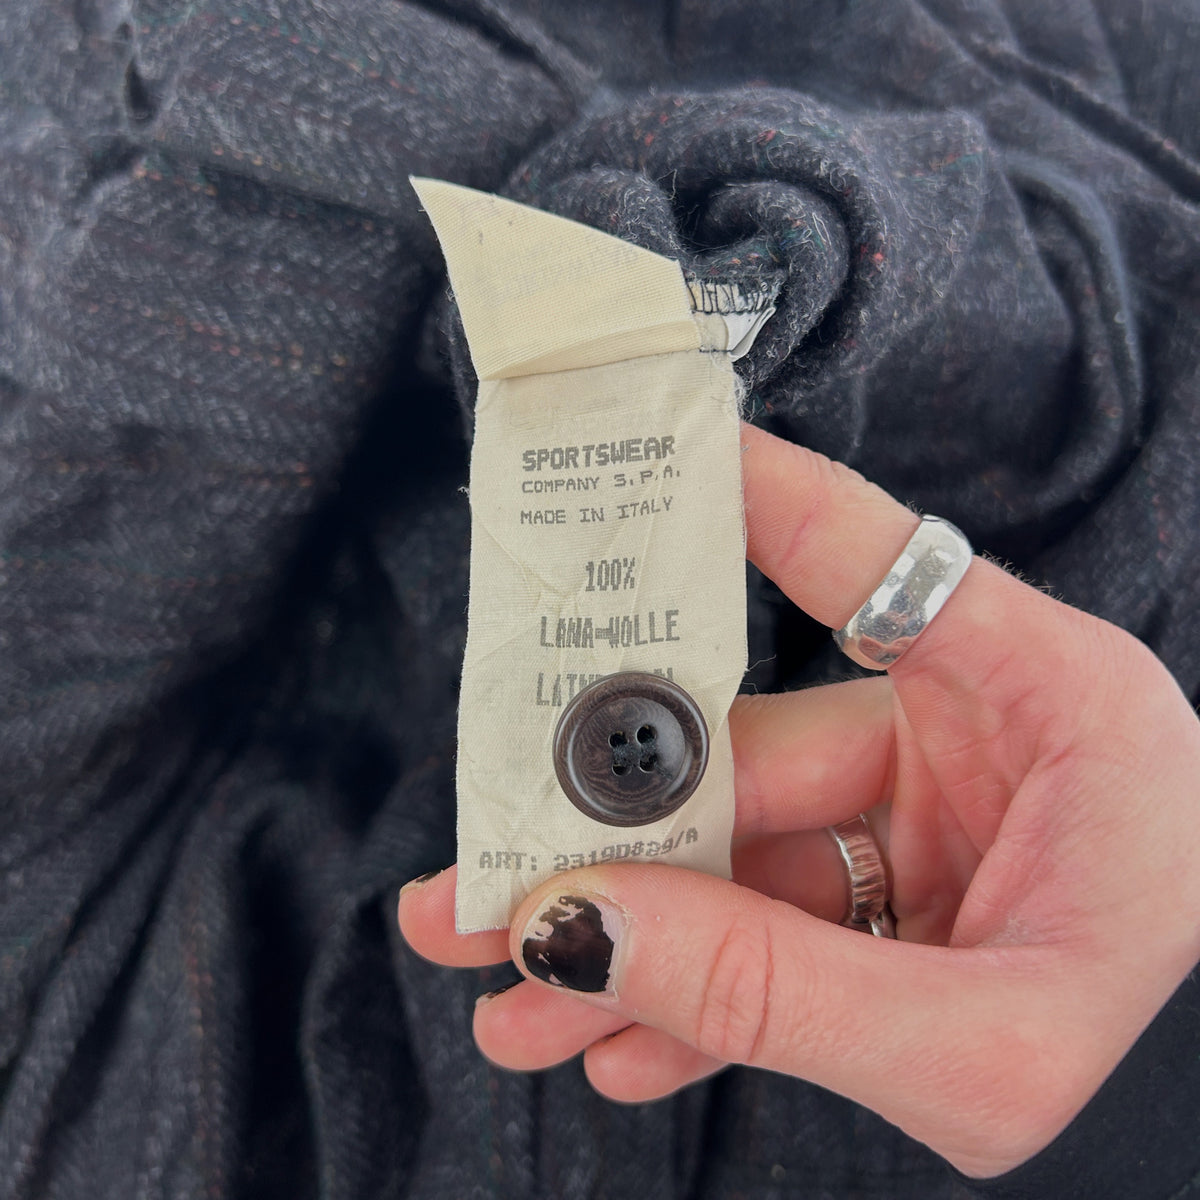 Vintage CP Company Knit Button Up Dress Woman&#39;s Size S